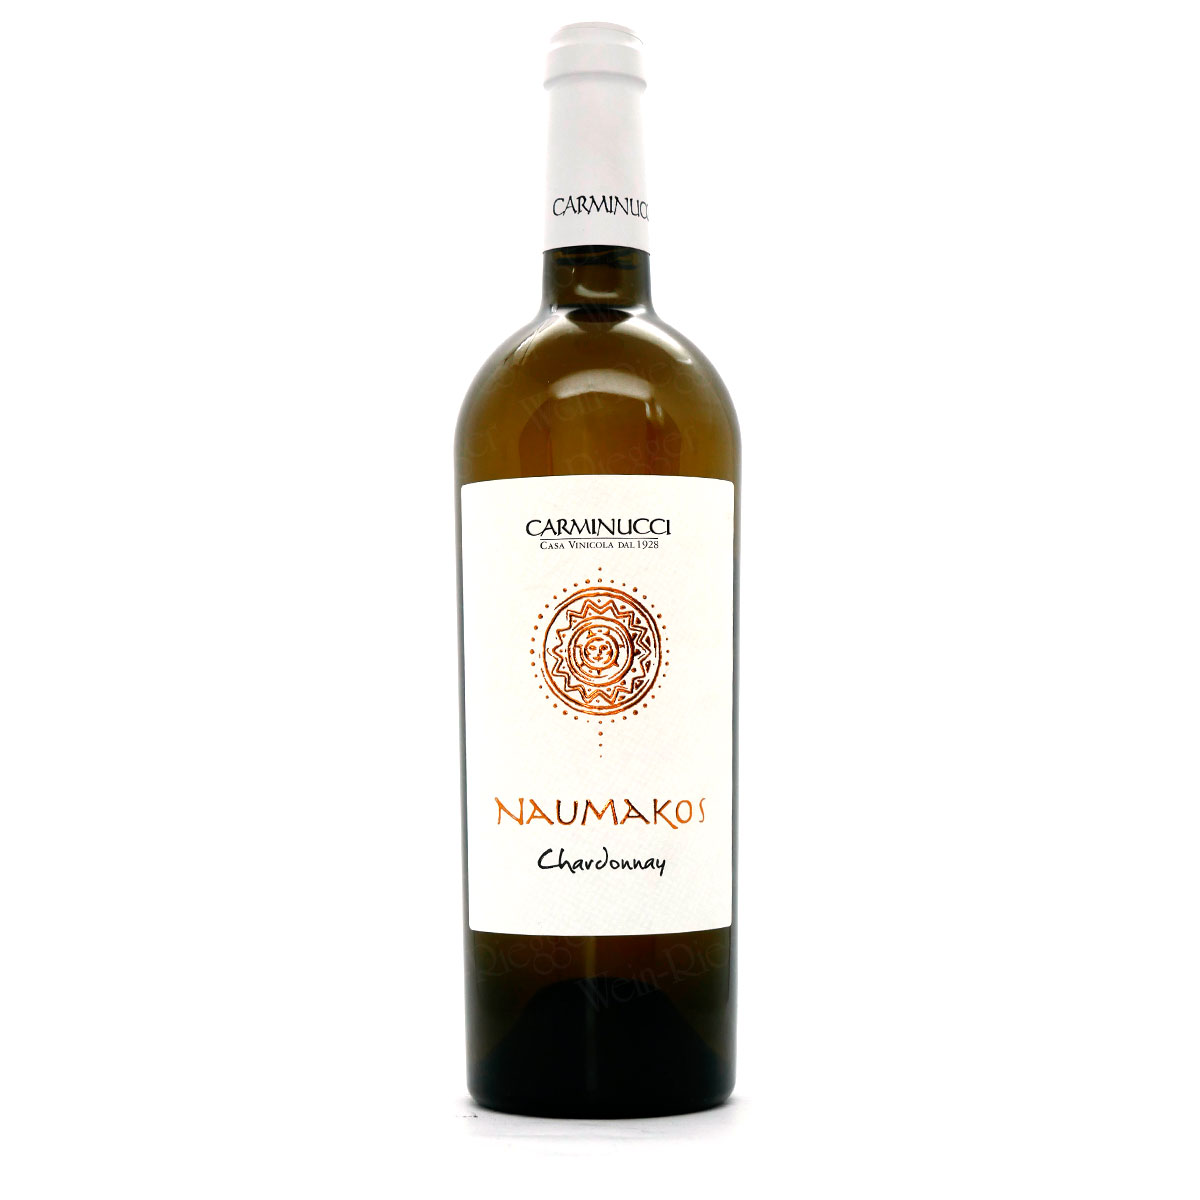 Naumakos Chardonnay | Carminucci